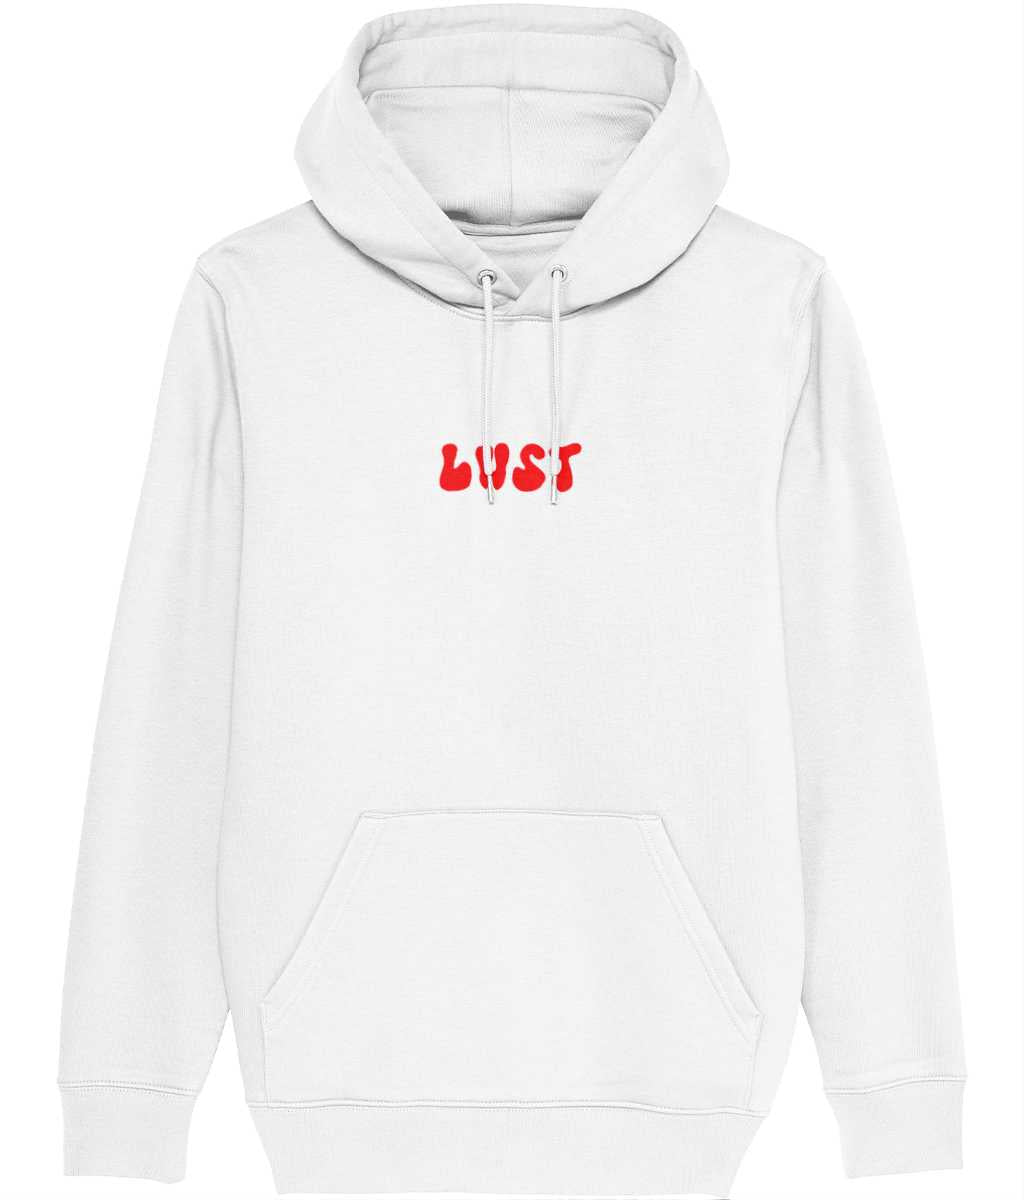 Lust print hoodie Cherchez La Femme brand